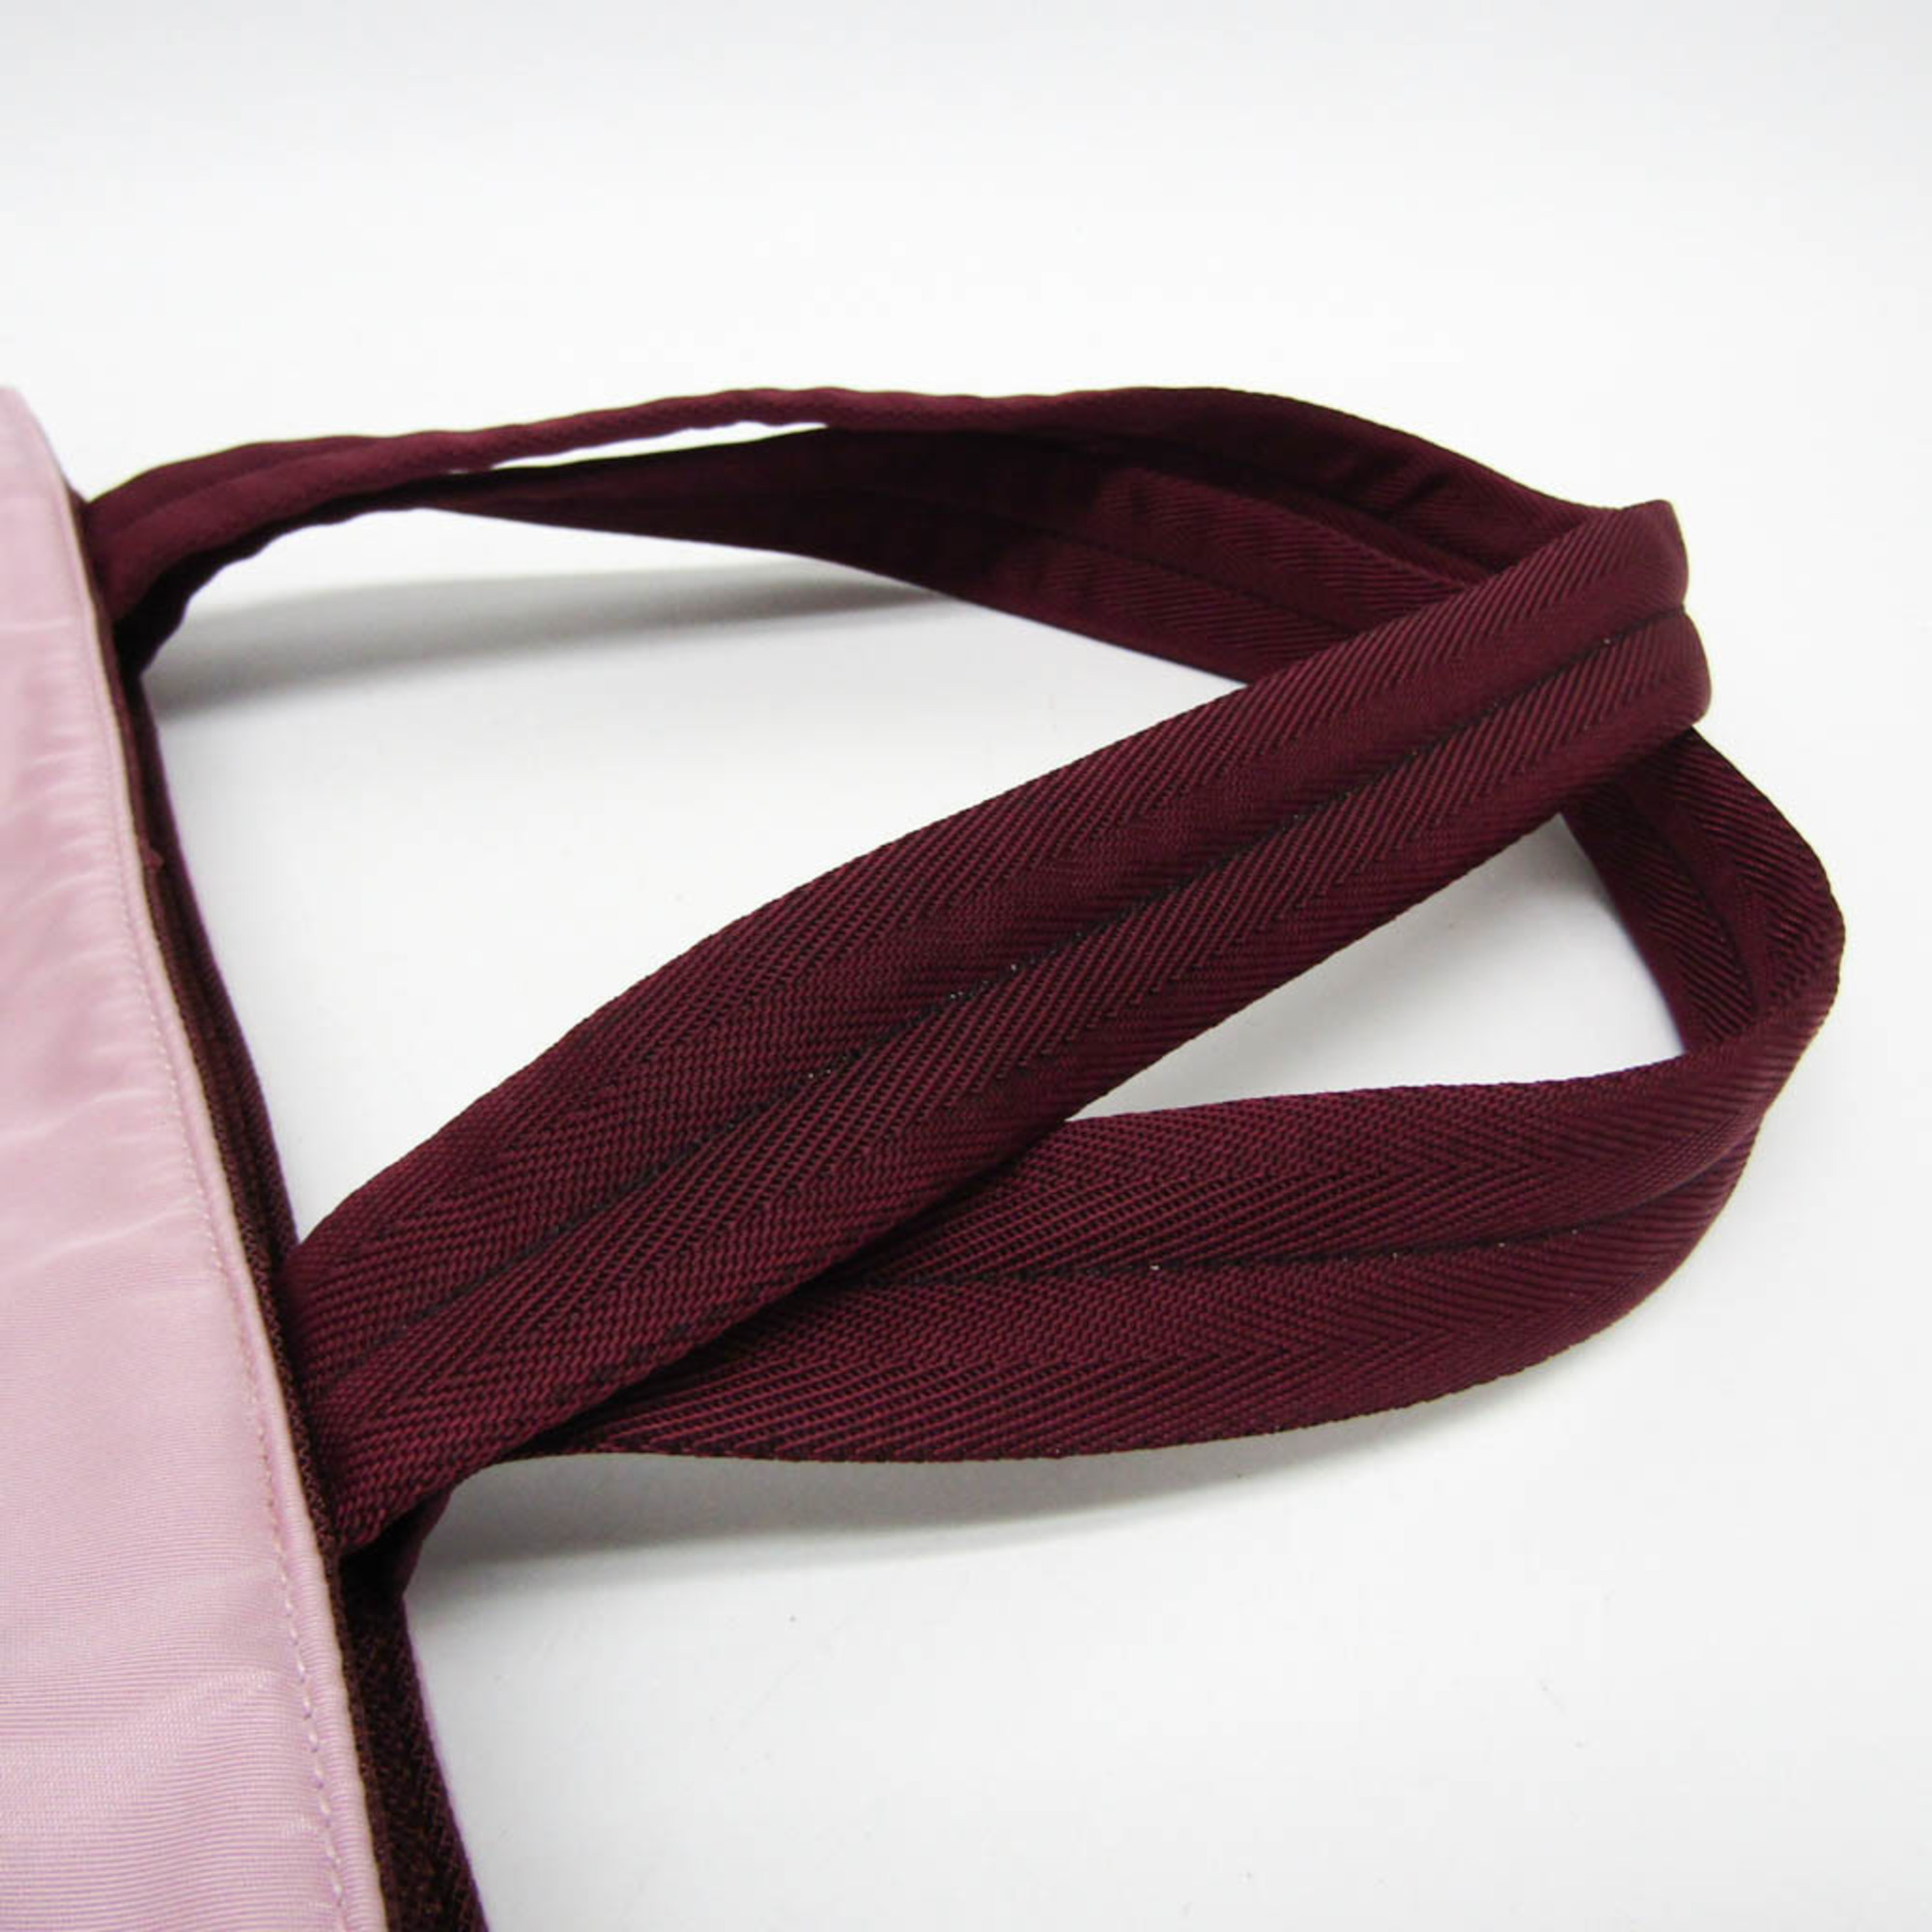 Prada Large Tote With Towel Blanket B10203 Women's Nylon,Canvas Tote Bag Bordeaux,Light Pink